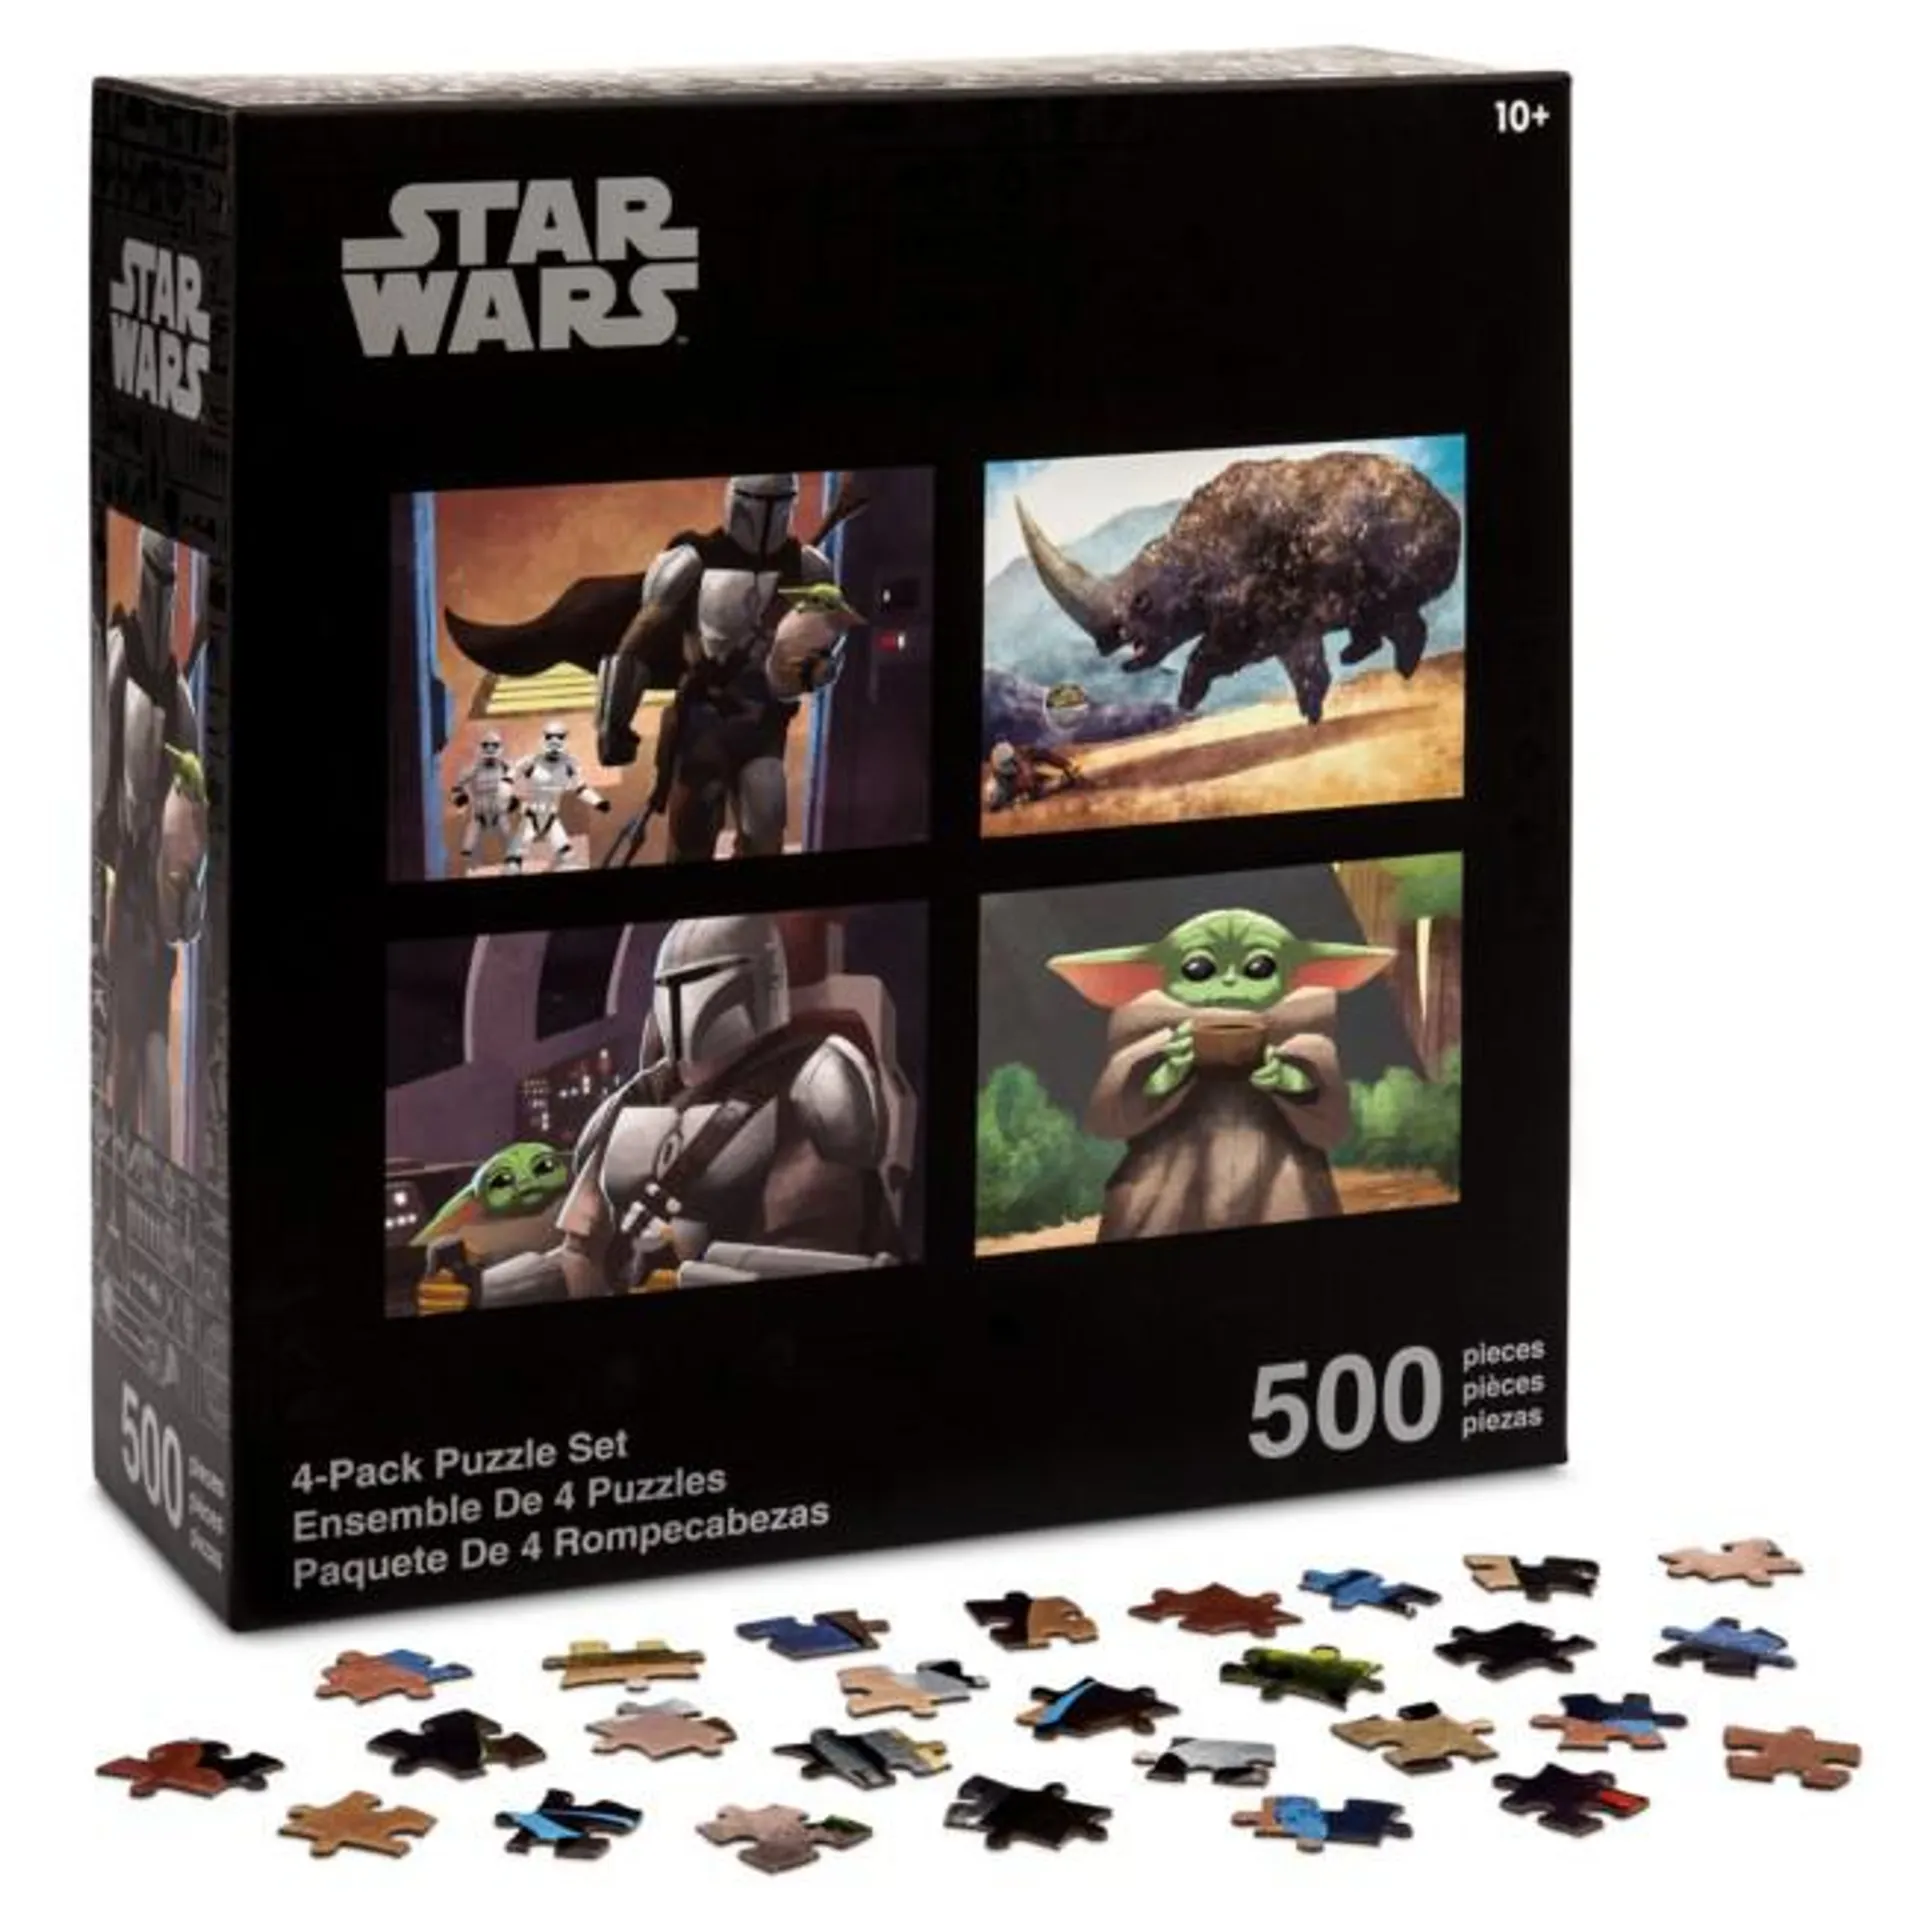 Disney Store Star Wars: The Mandalorian Four-Pack Puzzle Set